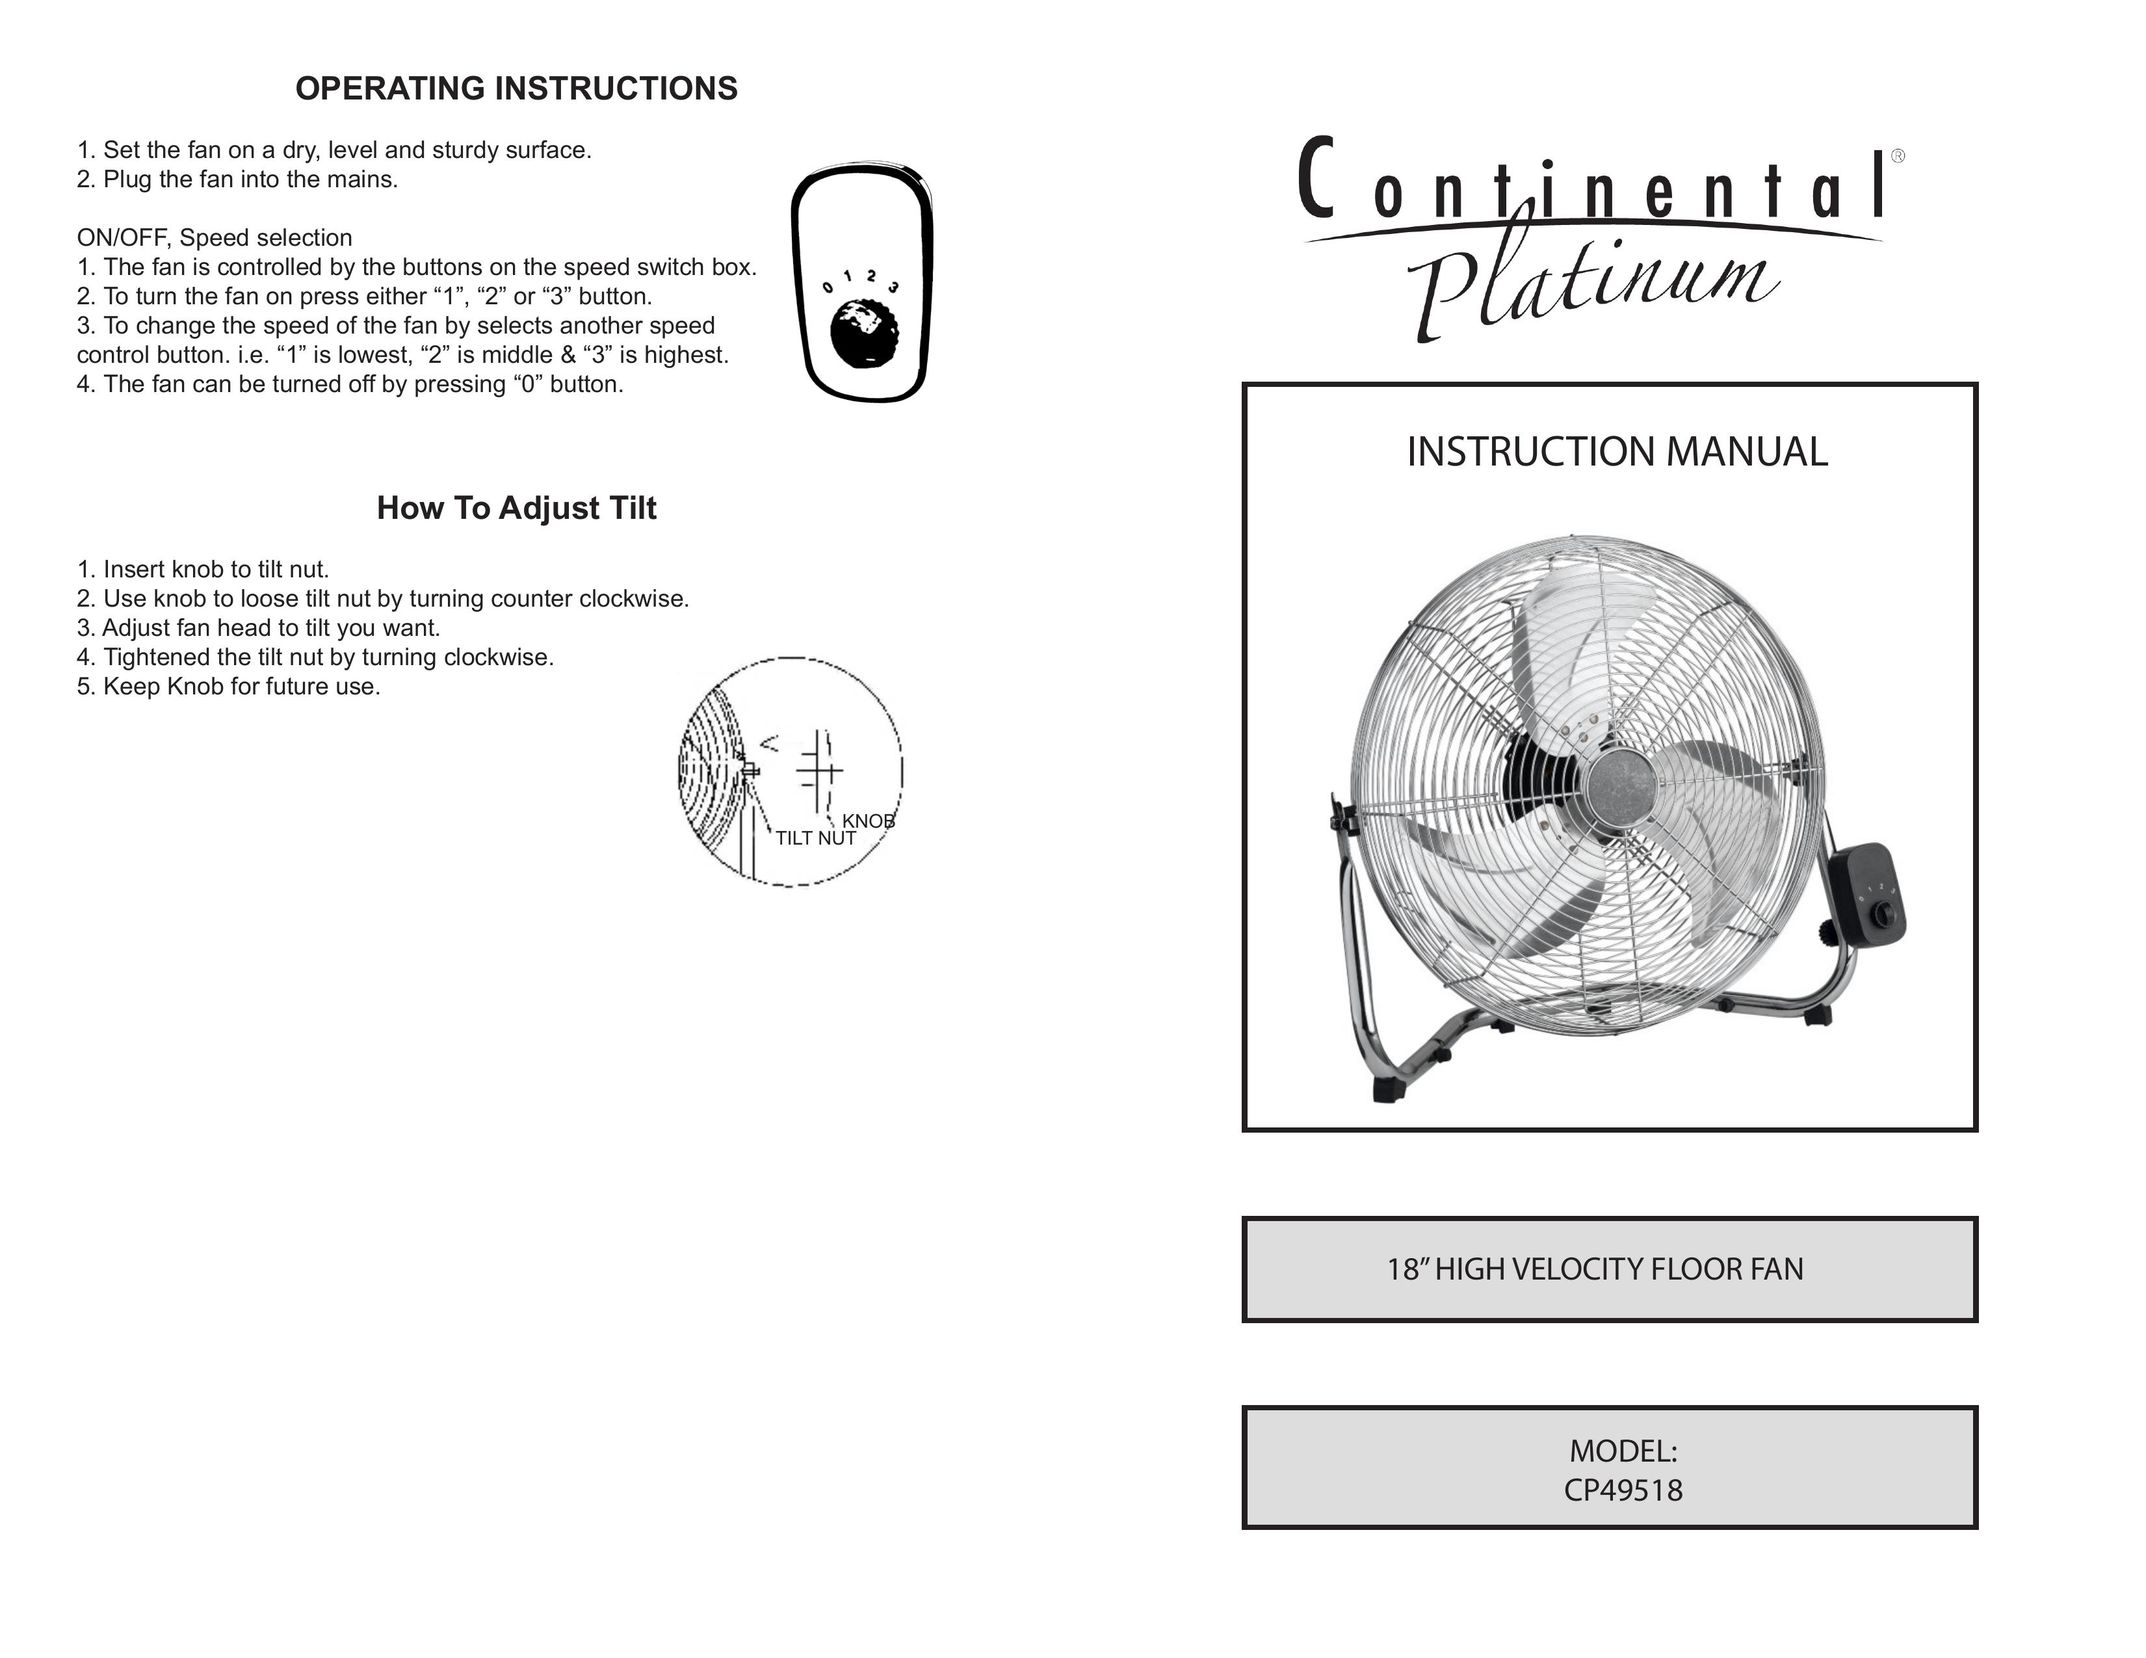 Continental Platinum CP49518 Fan User Manual